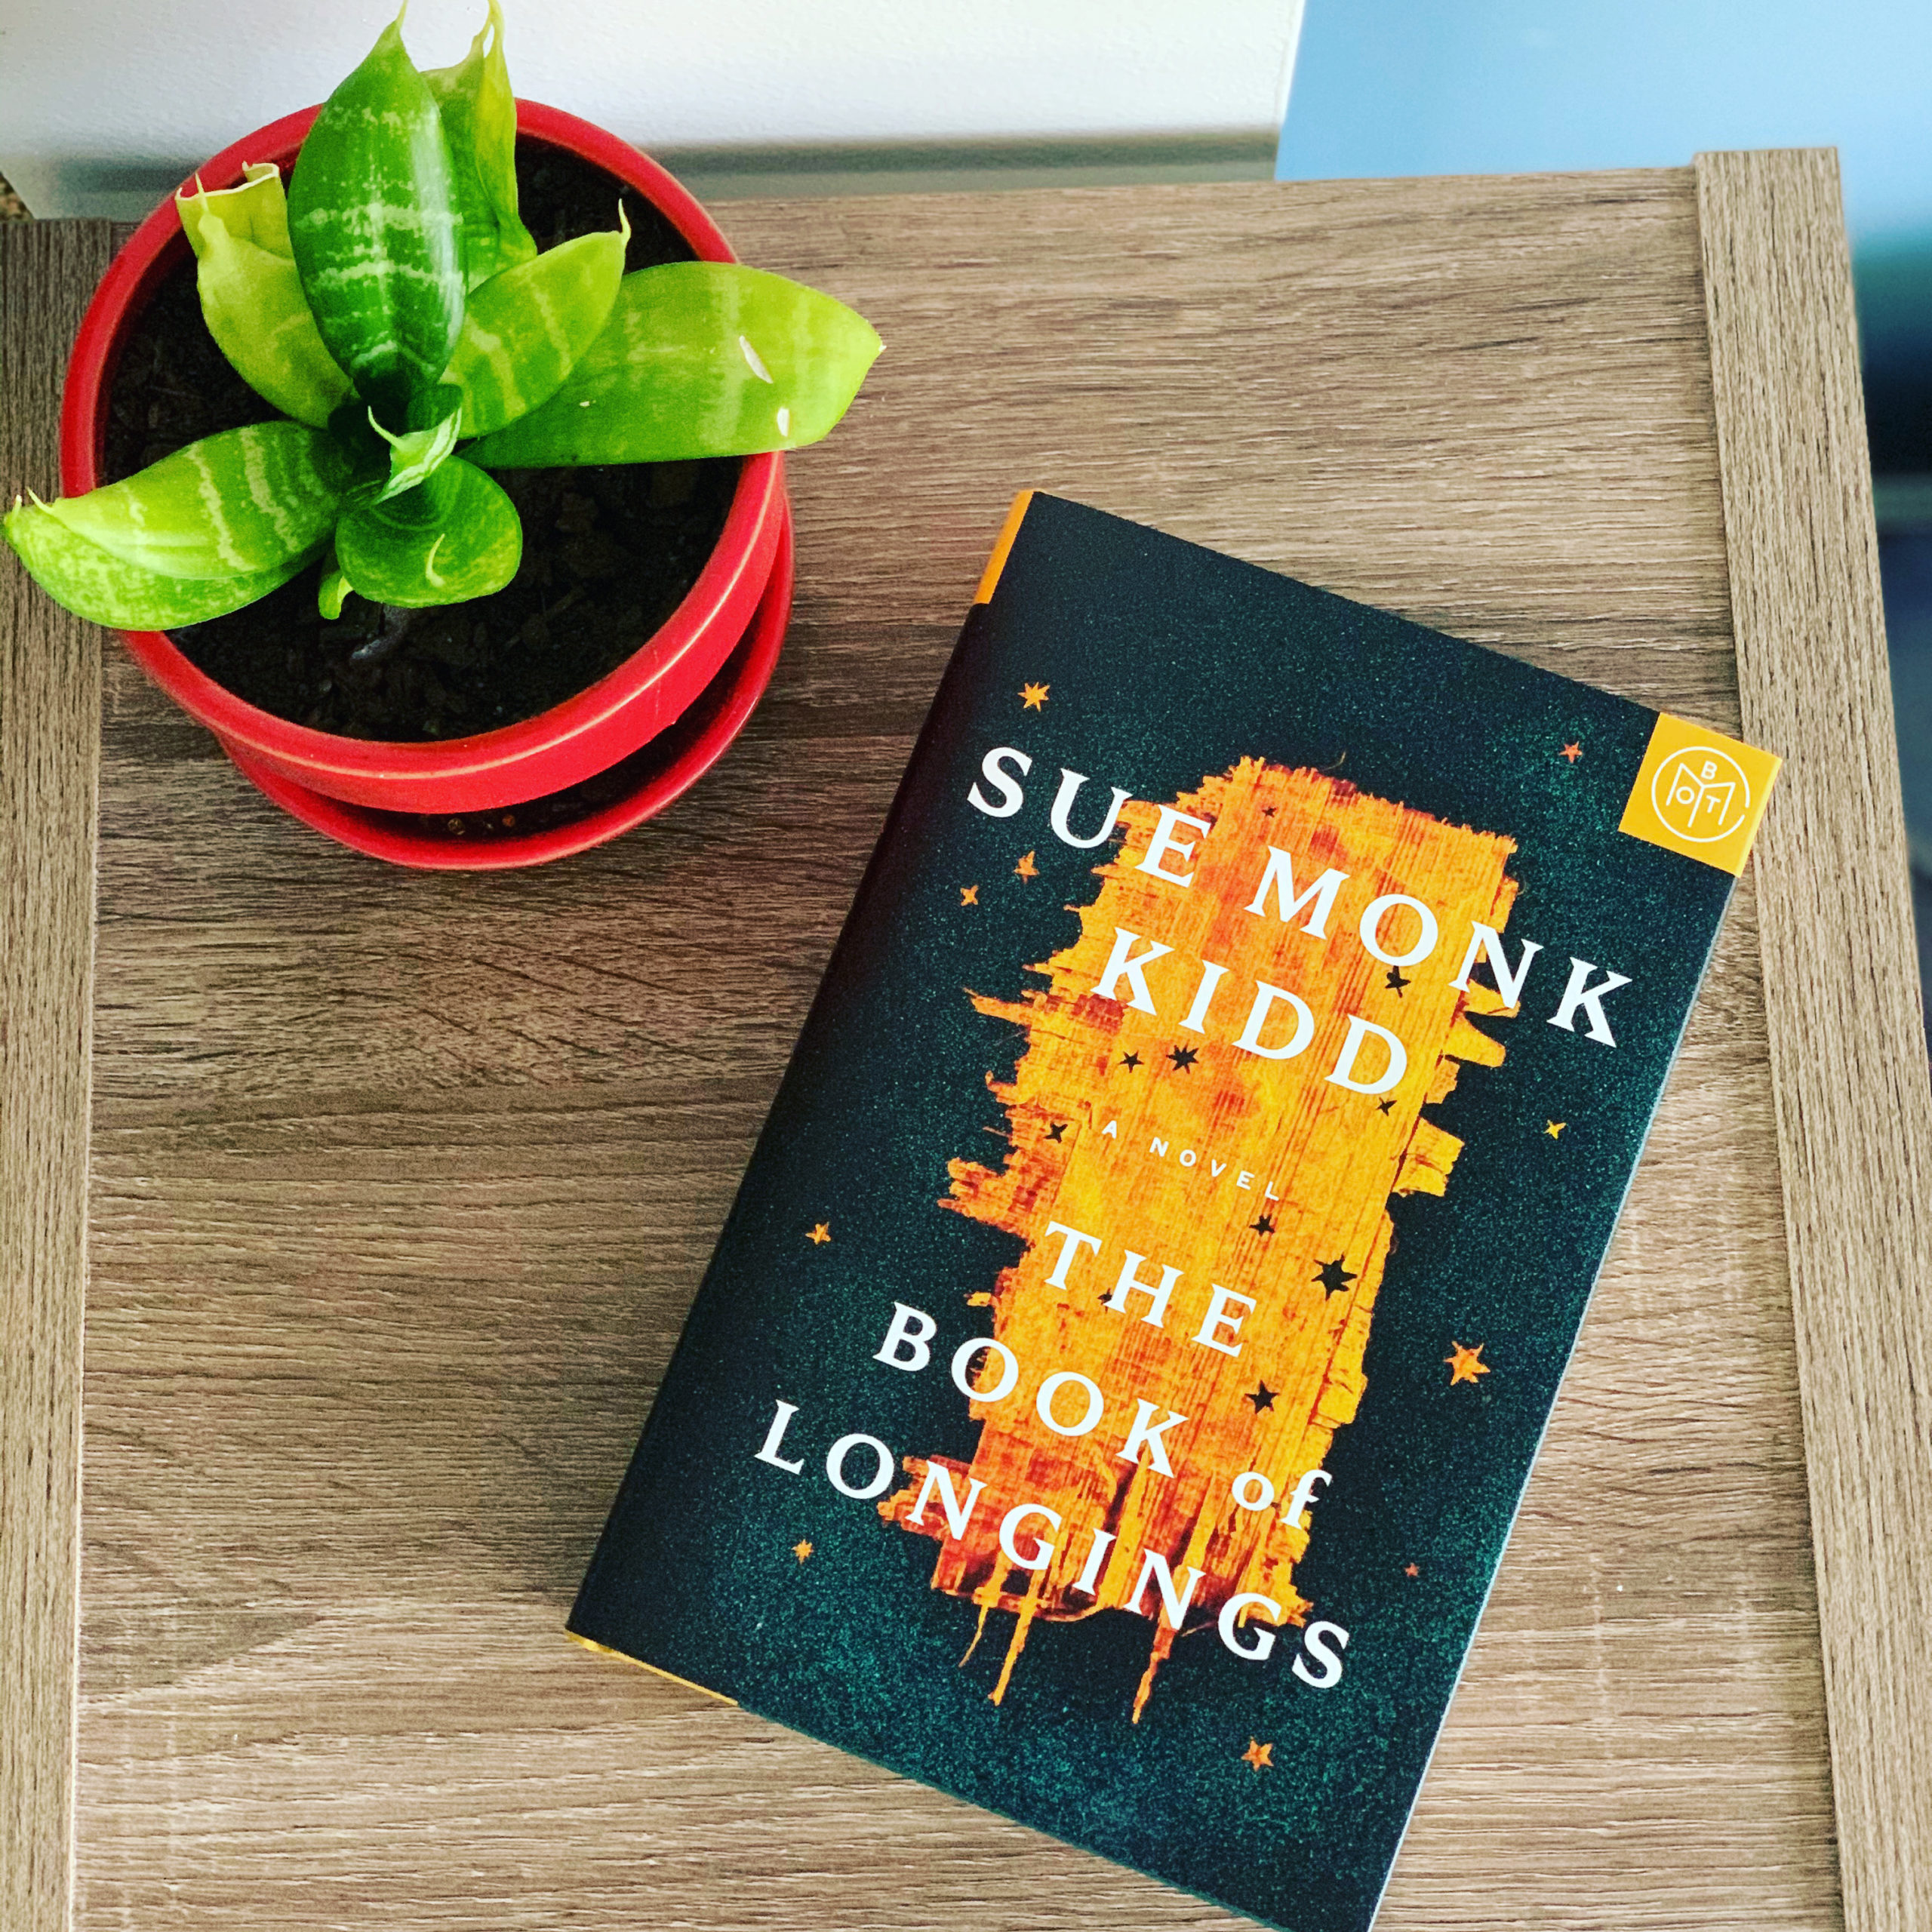 The Book of Longings by Sue Monk Kidd #brandisbookcorner #bookreviews #beingfibromom